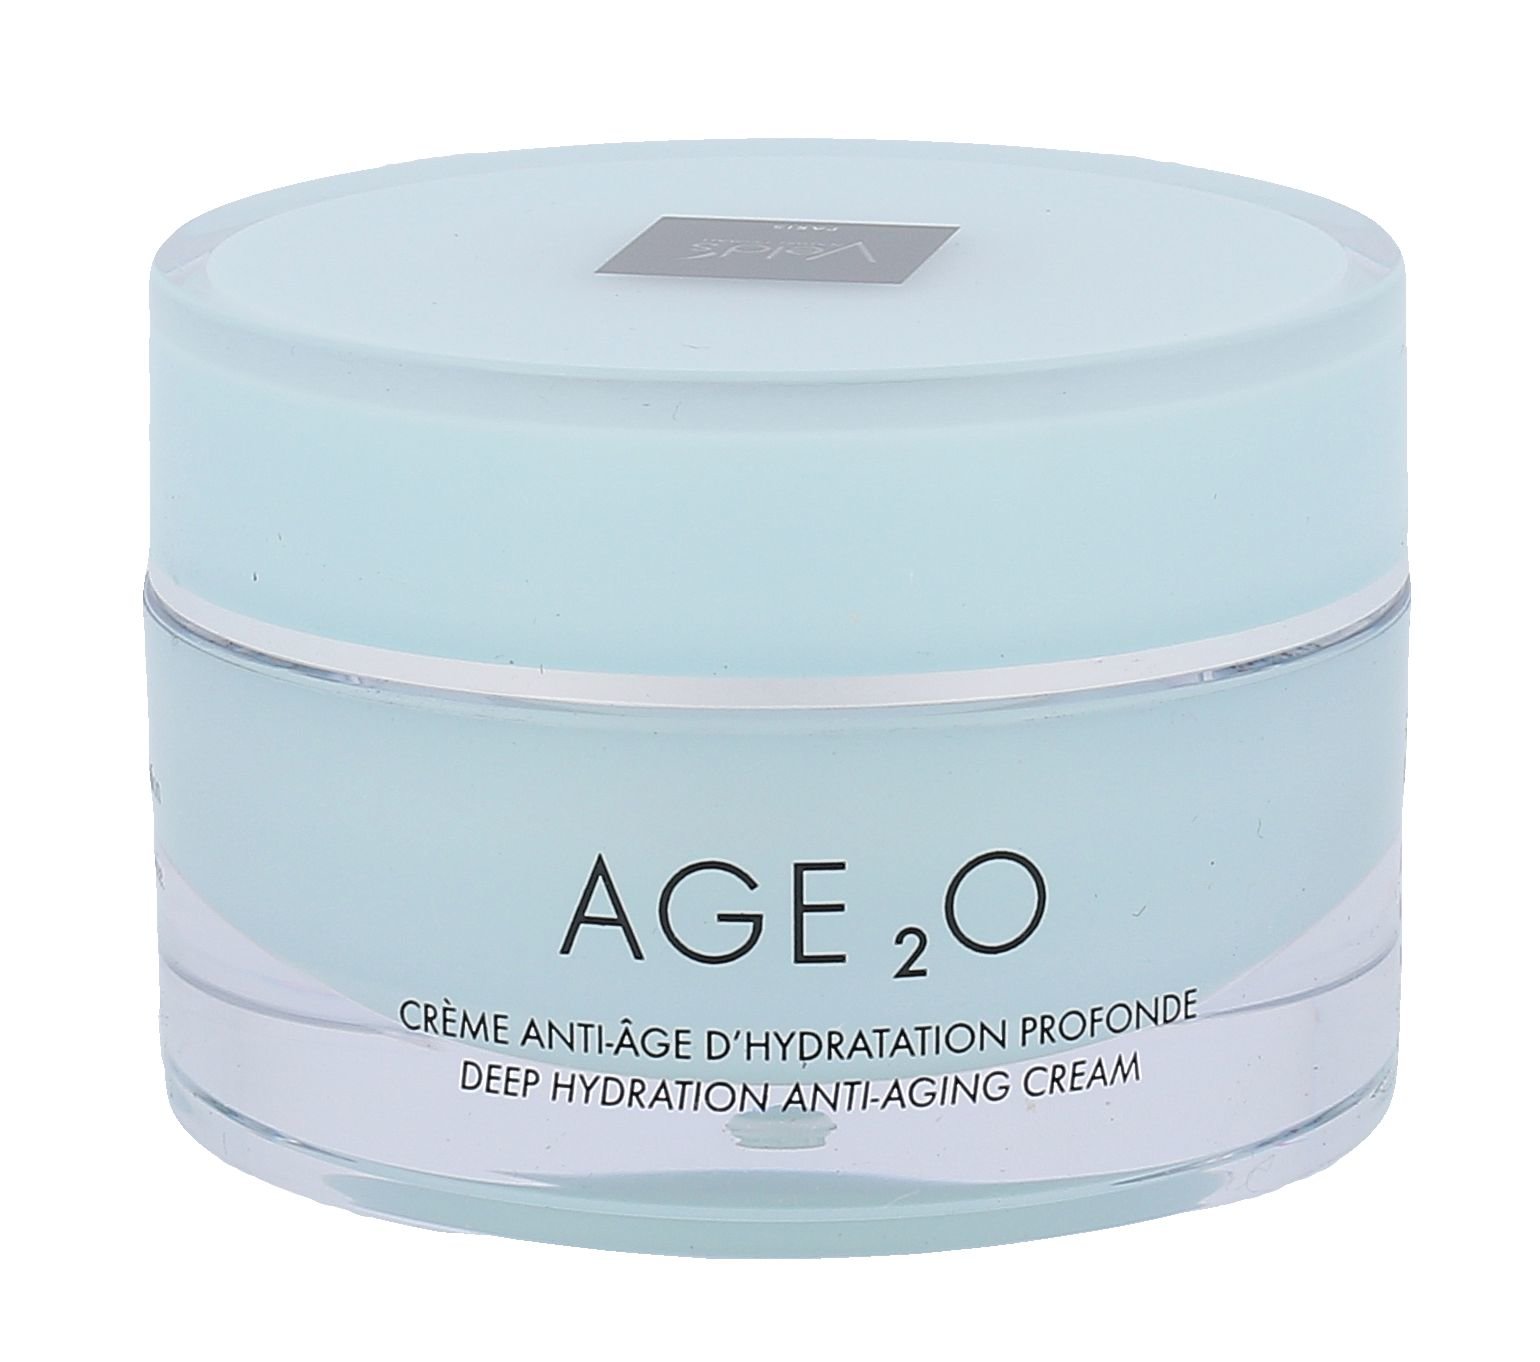 Veld´s Age 2O Deep Hydration Anti-aging Cream